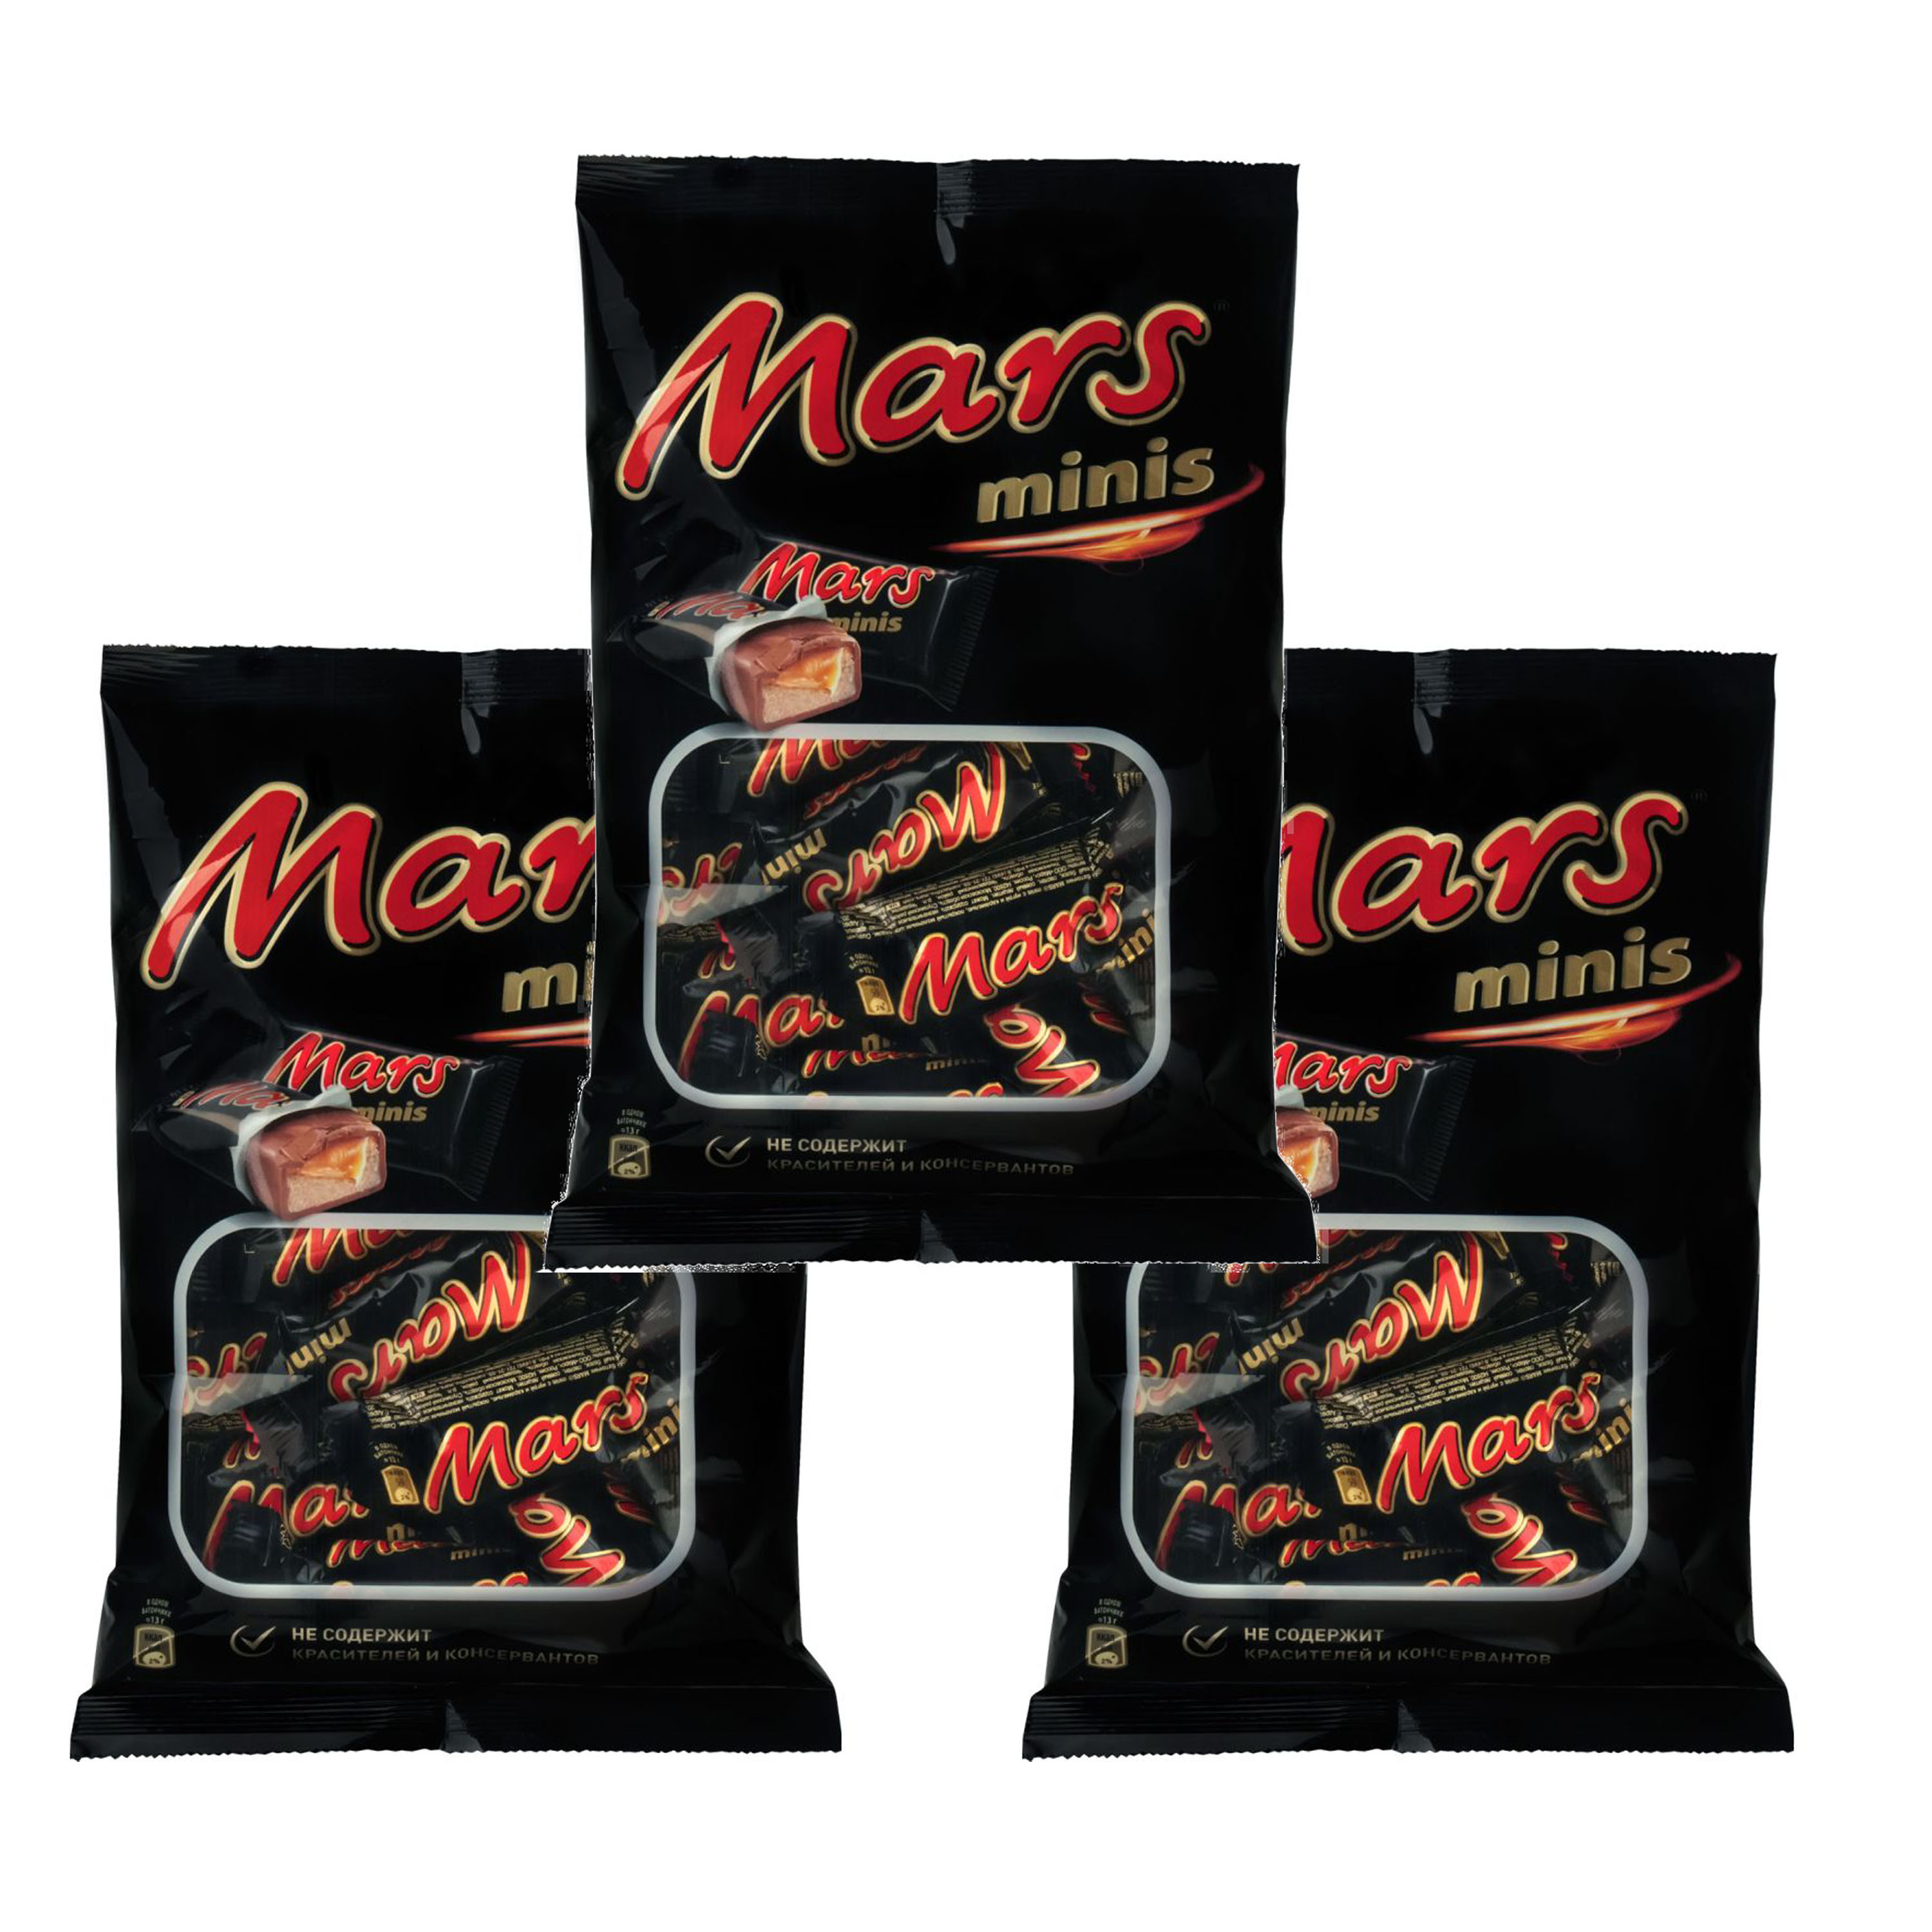 Шоколадные конфеты Mars Minis, Молочный шоколад, Карамель, Пакет, 182 гр.*3шт.